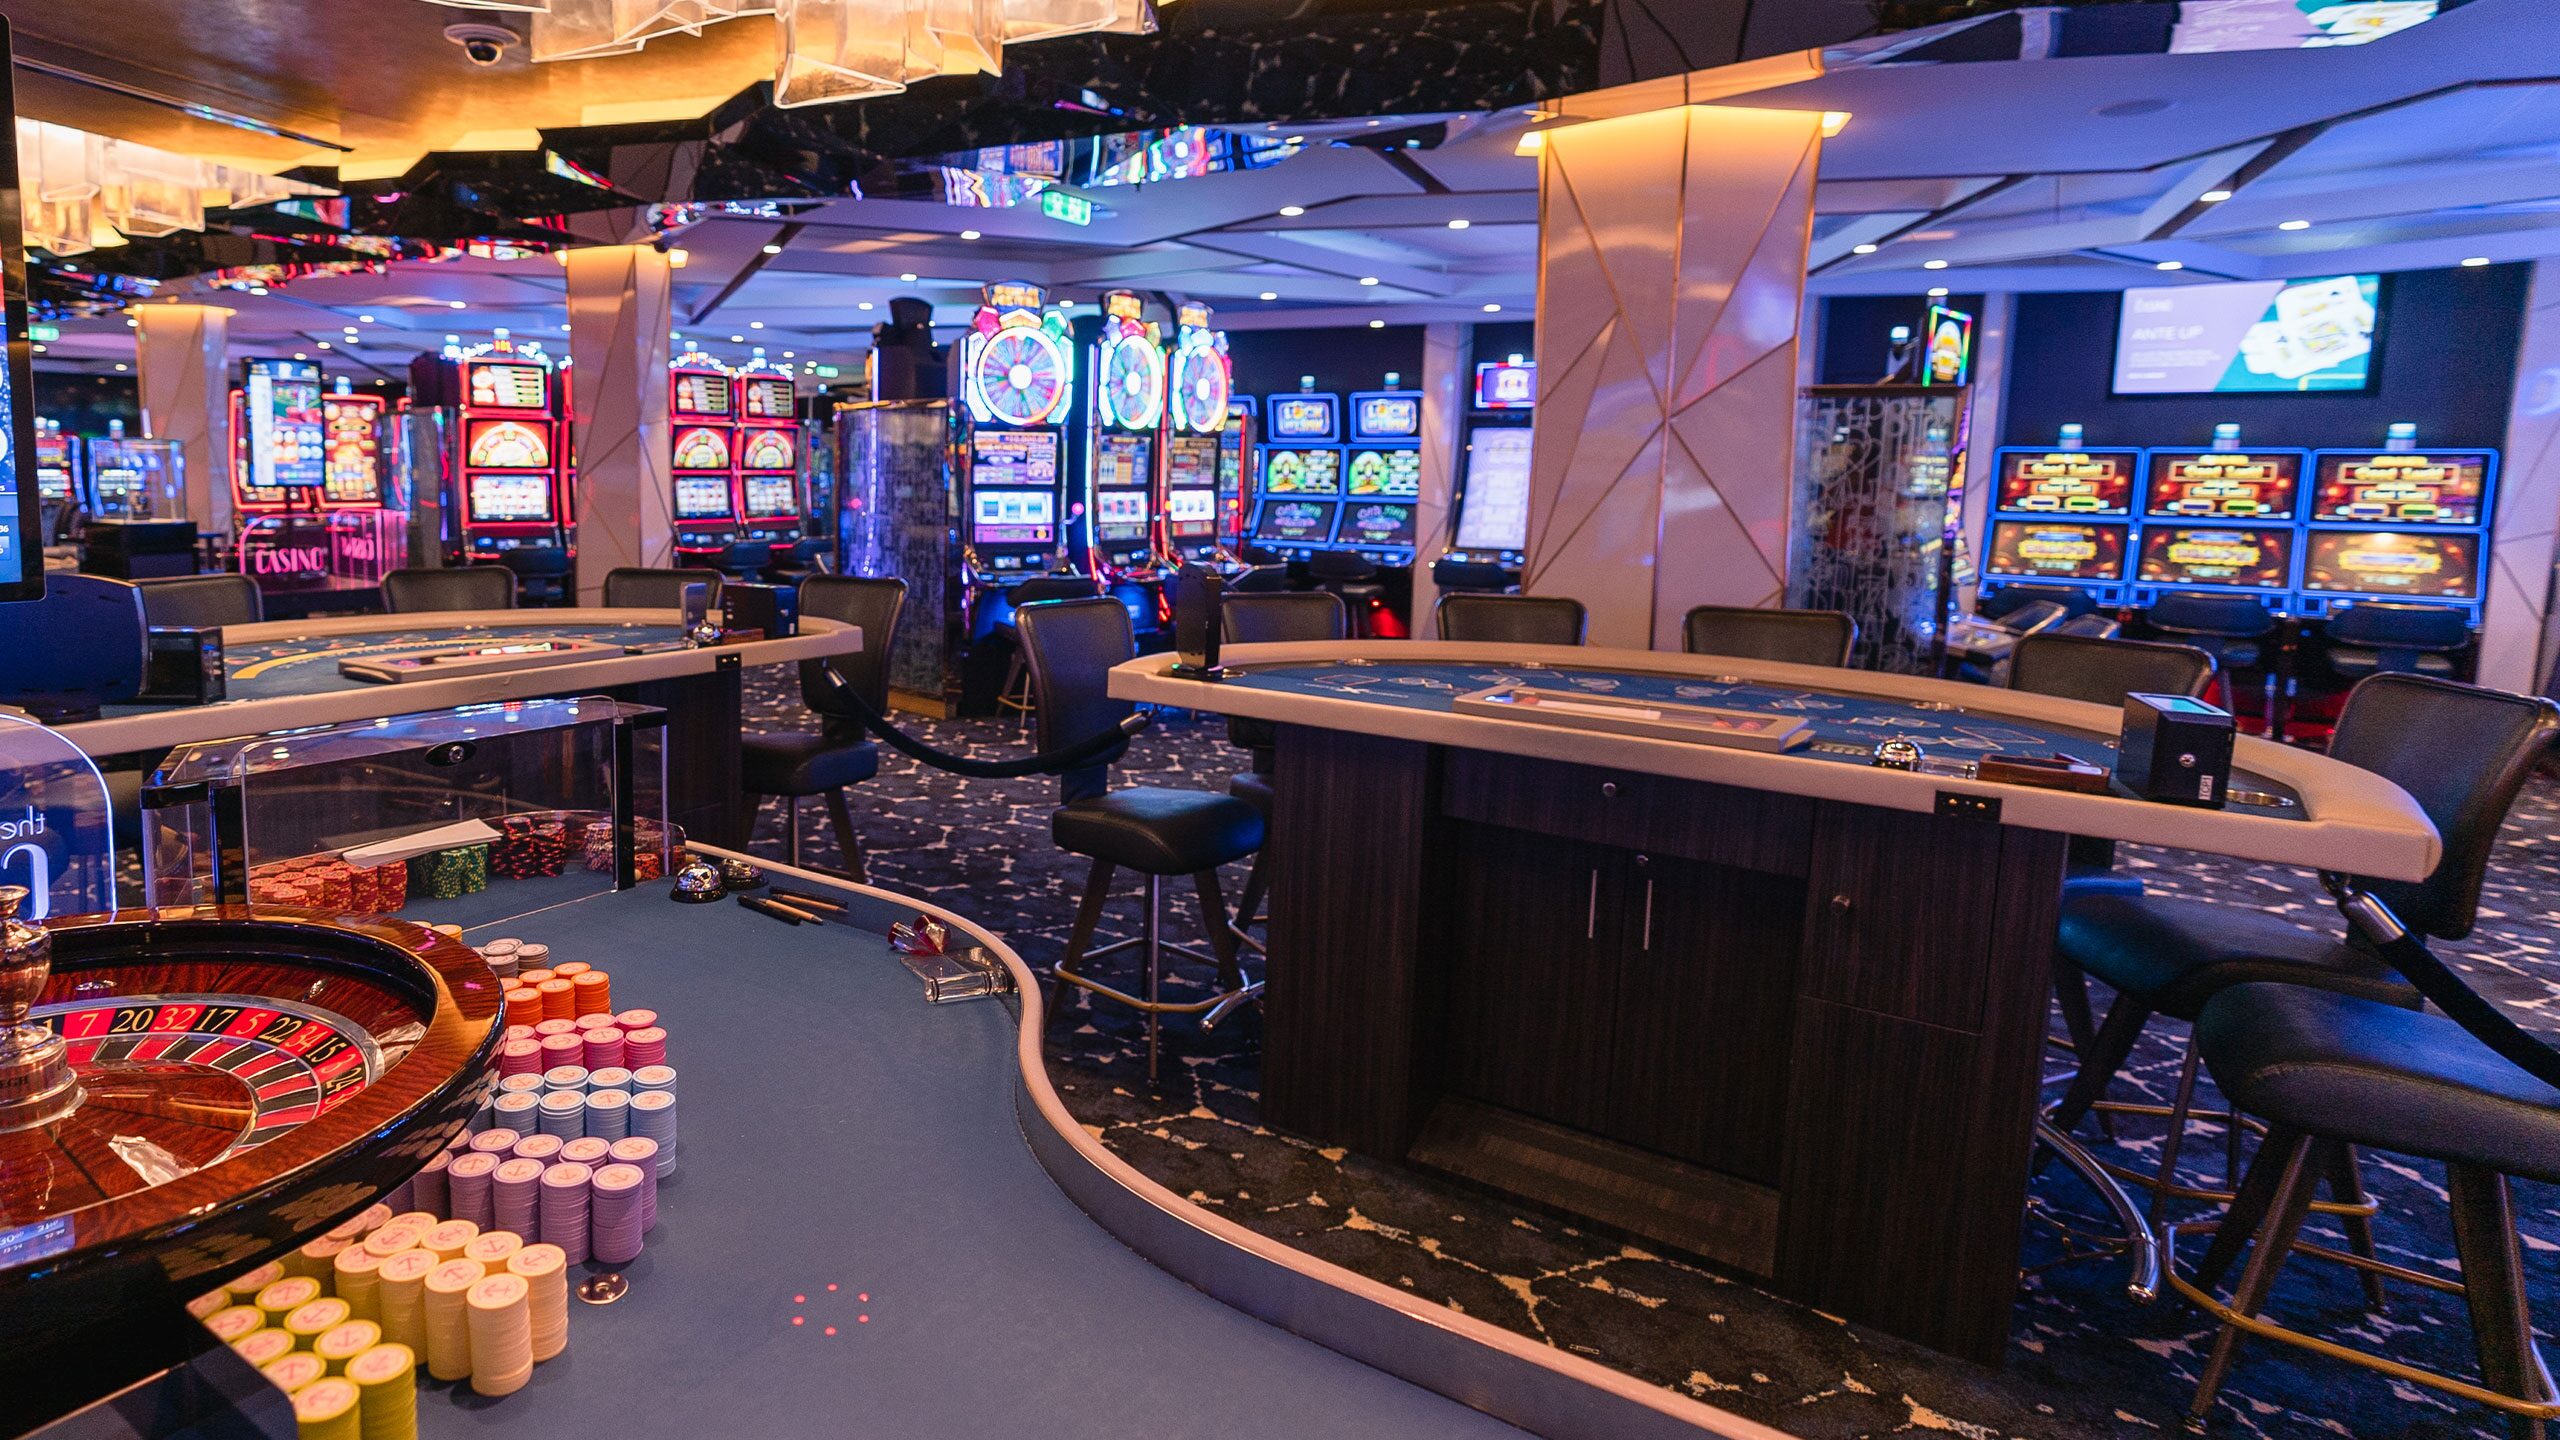 Cruise casino online основные понятия ставки на спорт